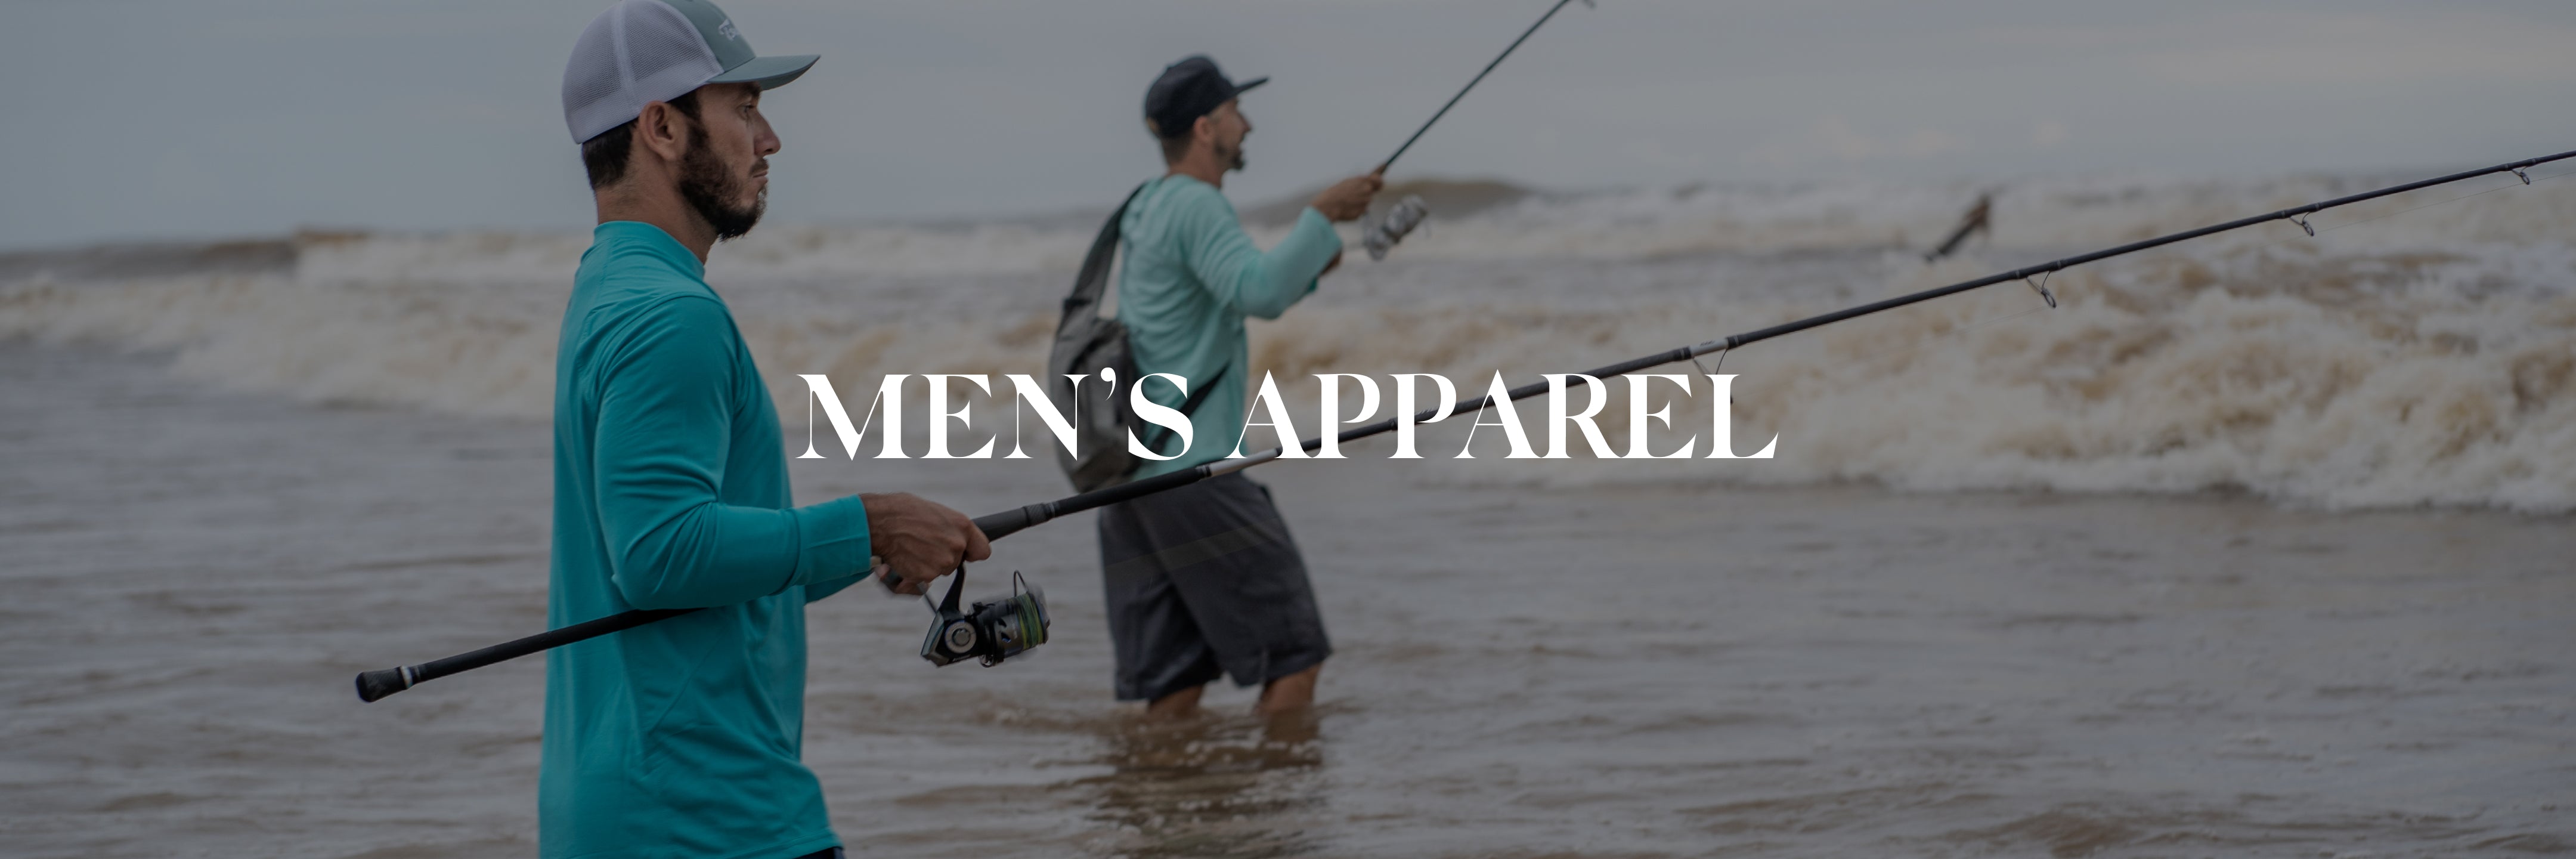 Men's Apparel  Bimini Bay Outfitters